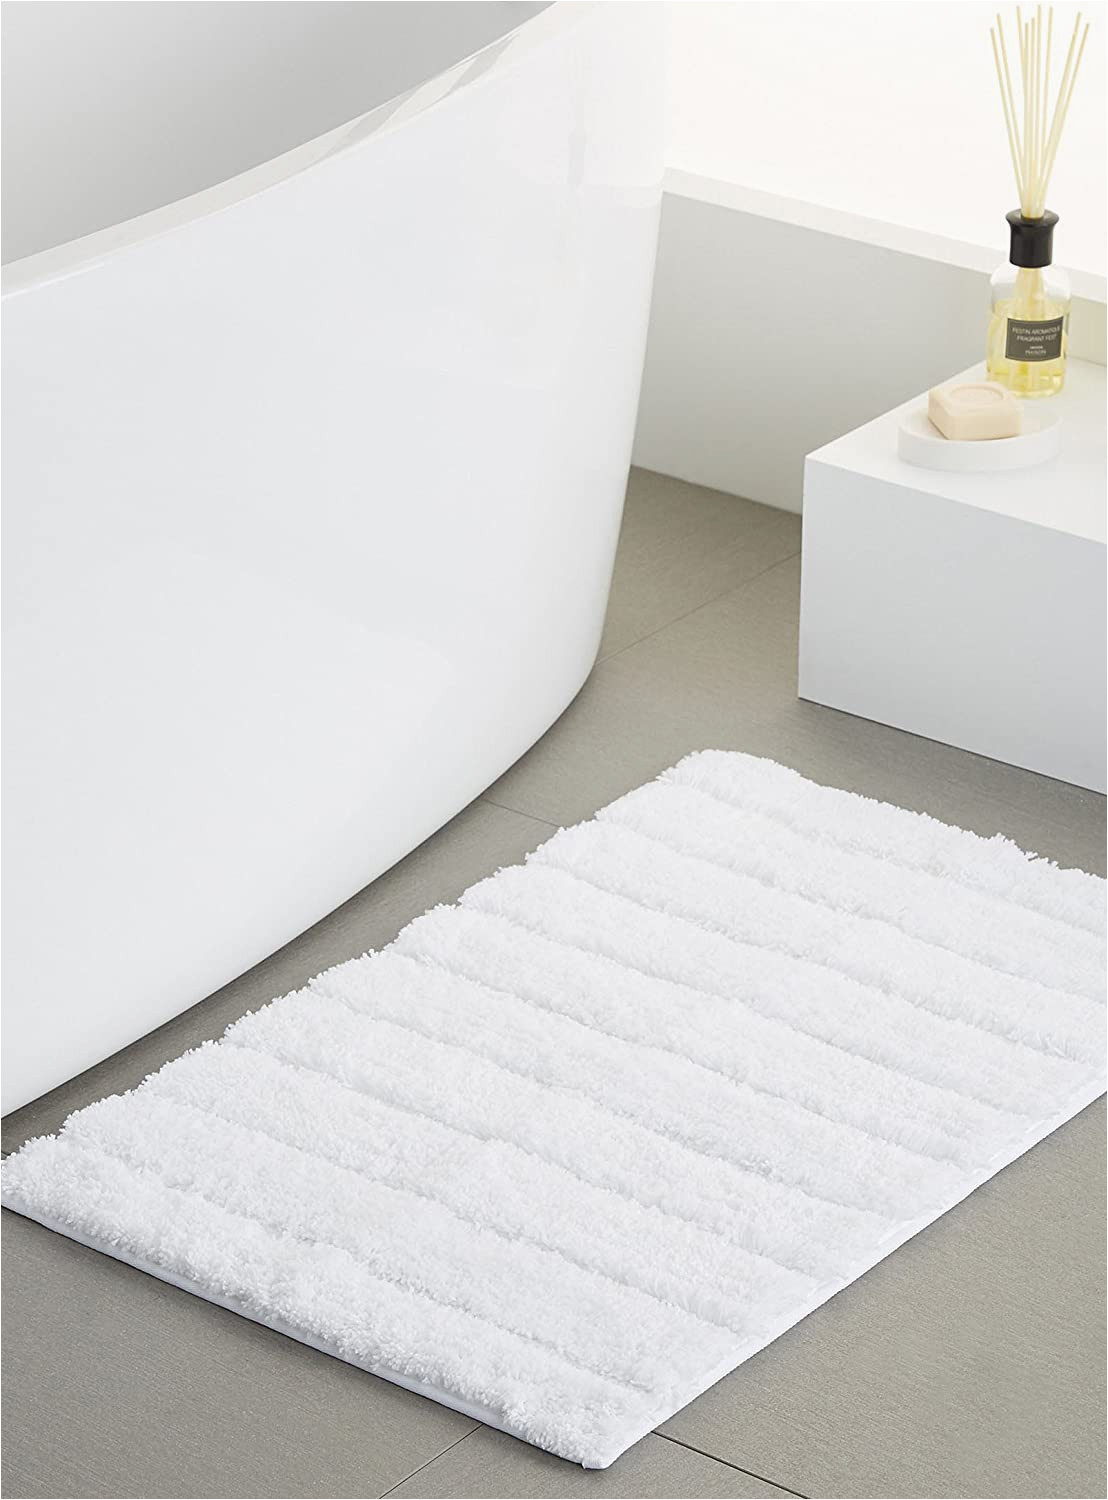 Micro Polyester Bath Rug Autohigh Non Slip Backing Microfiber Shaggy Bathroom Mats 17 X 24 Inches Basic White Bath Rugs